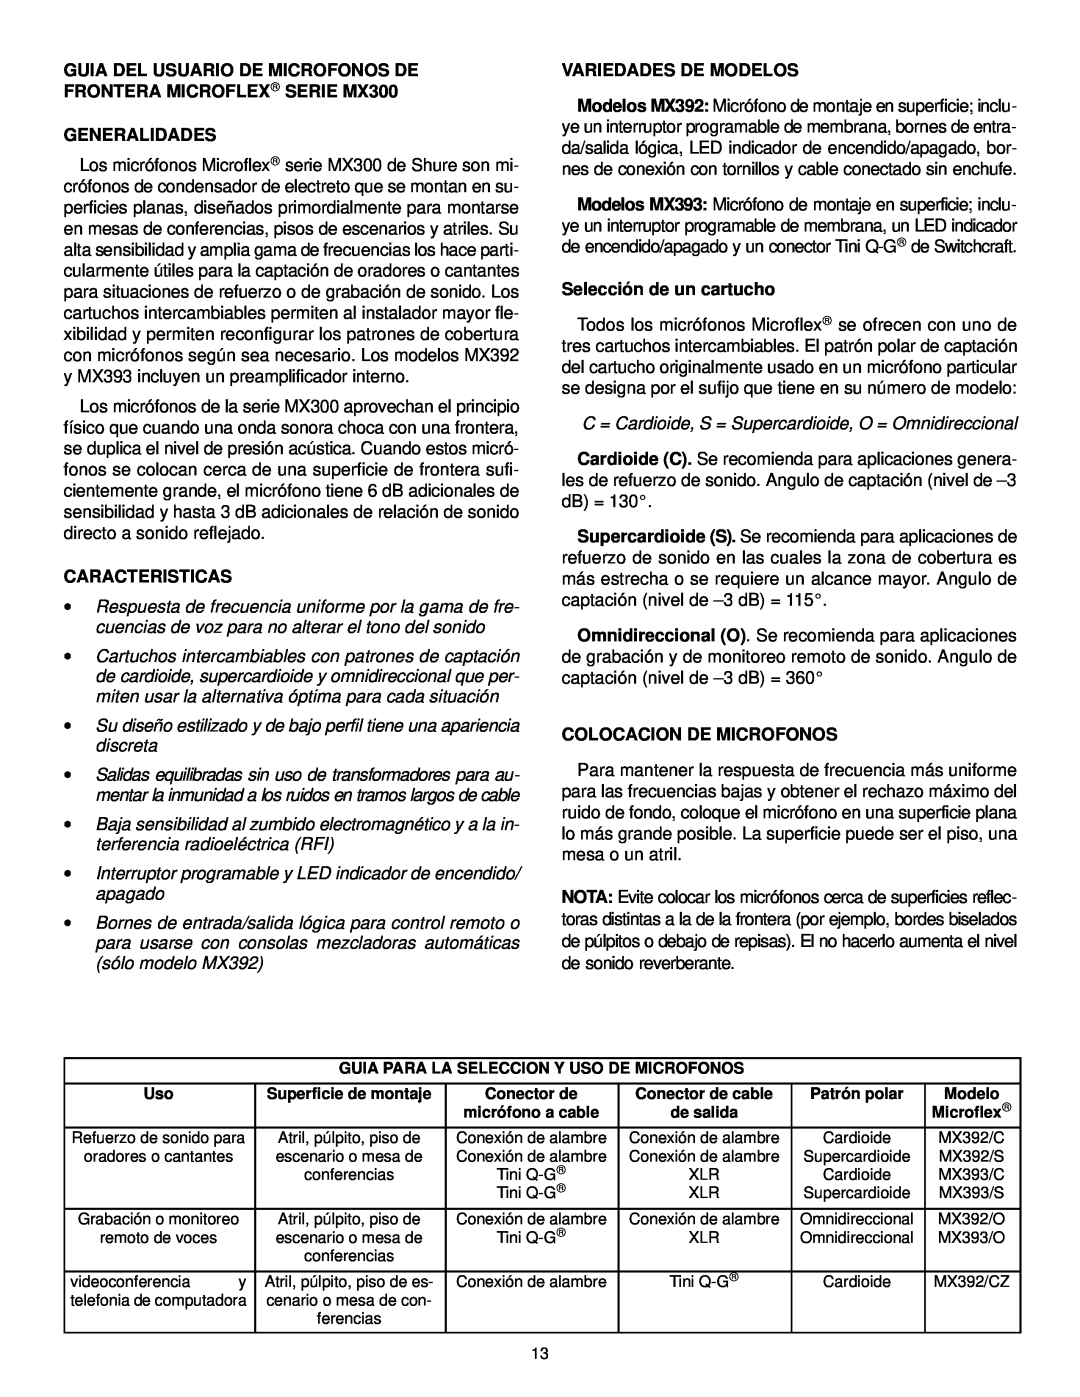 Shure manual GUIA DEL USUARIO DE MICROFONOS DE FRONTERA MICROFLEX SERIE MX300, Generalidades, Caracteristicas 